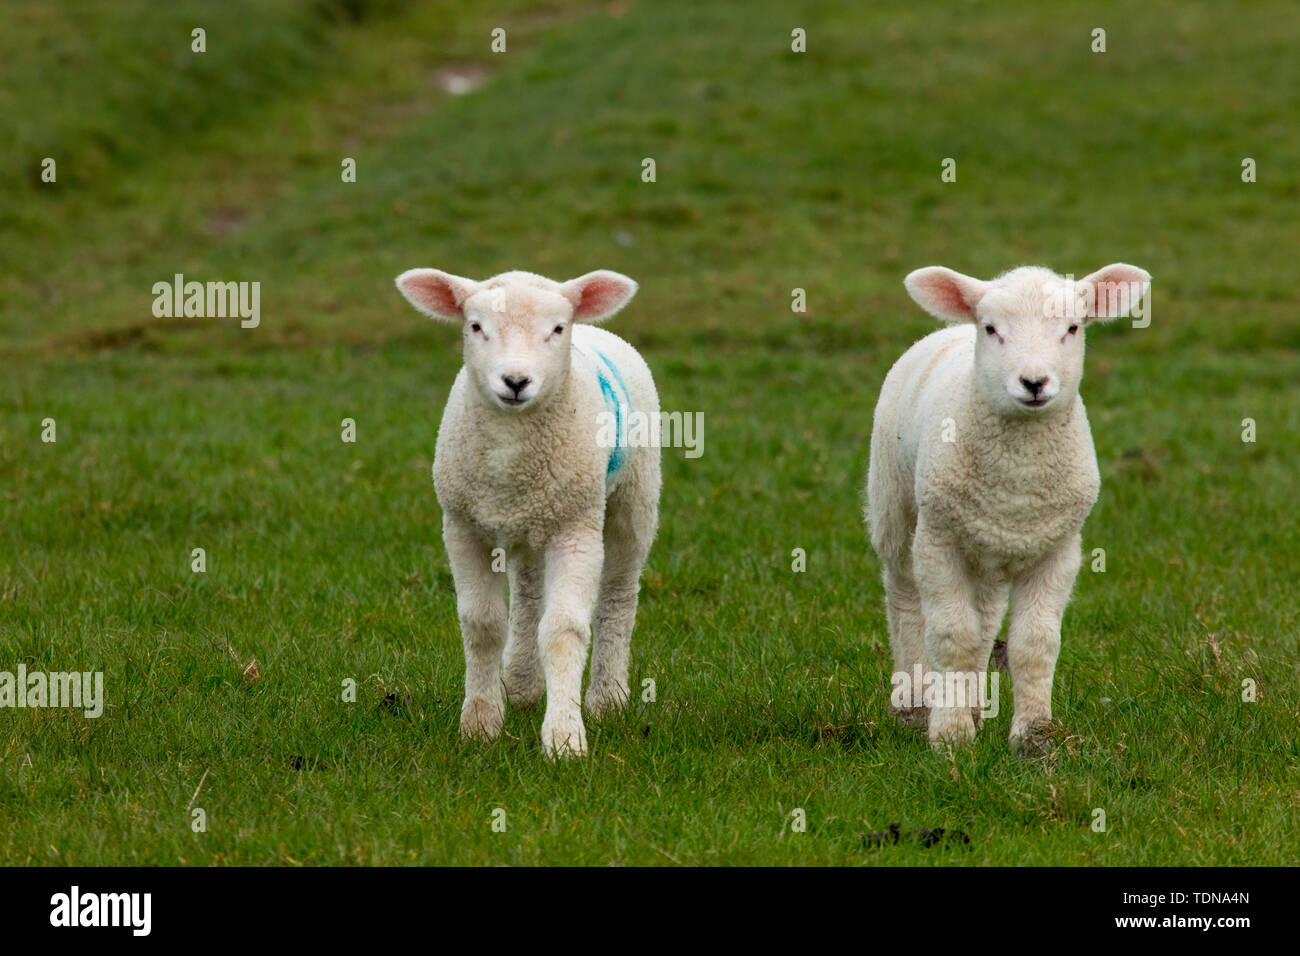 Domestic Sheep, lambs at deik, Nordstrand, Schleswig-Holstein, Germany Stock Photo